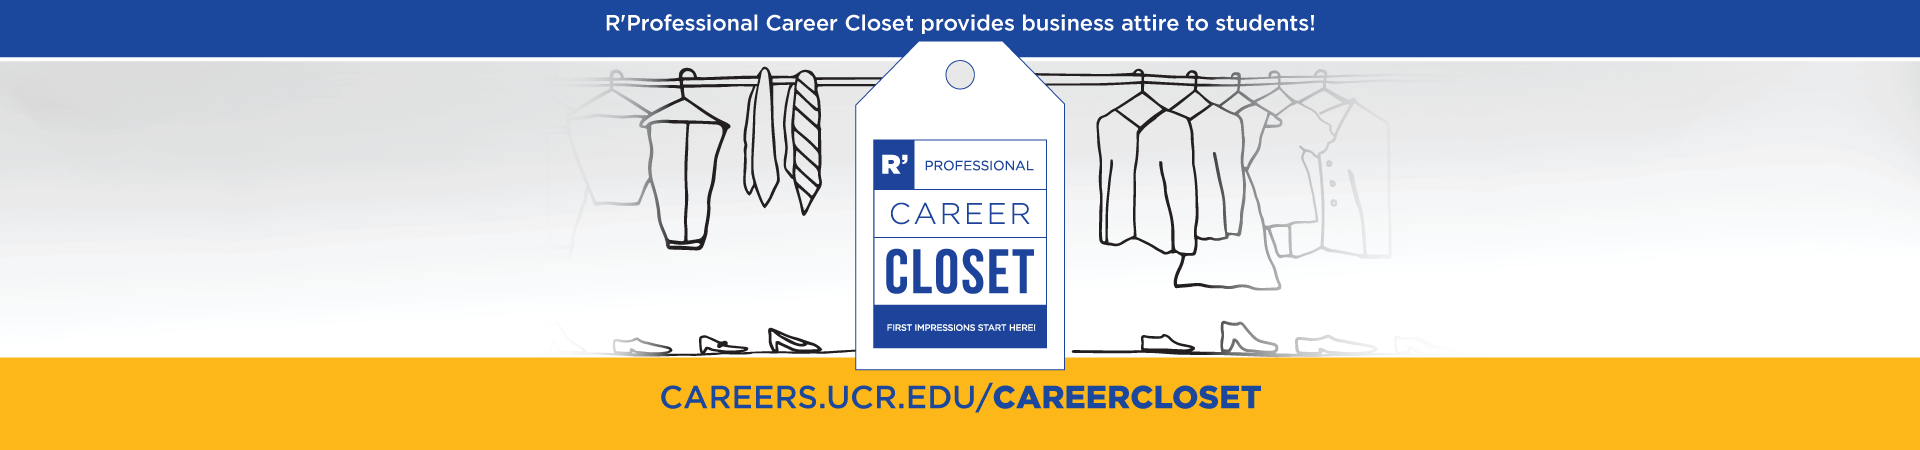 R'Professional Career Closet provides business attire to students! careers.ucr.edu/careercloset